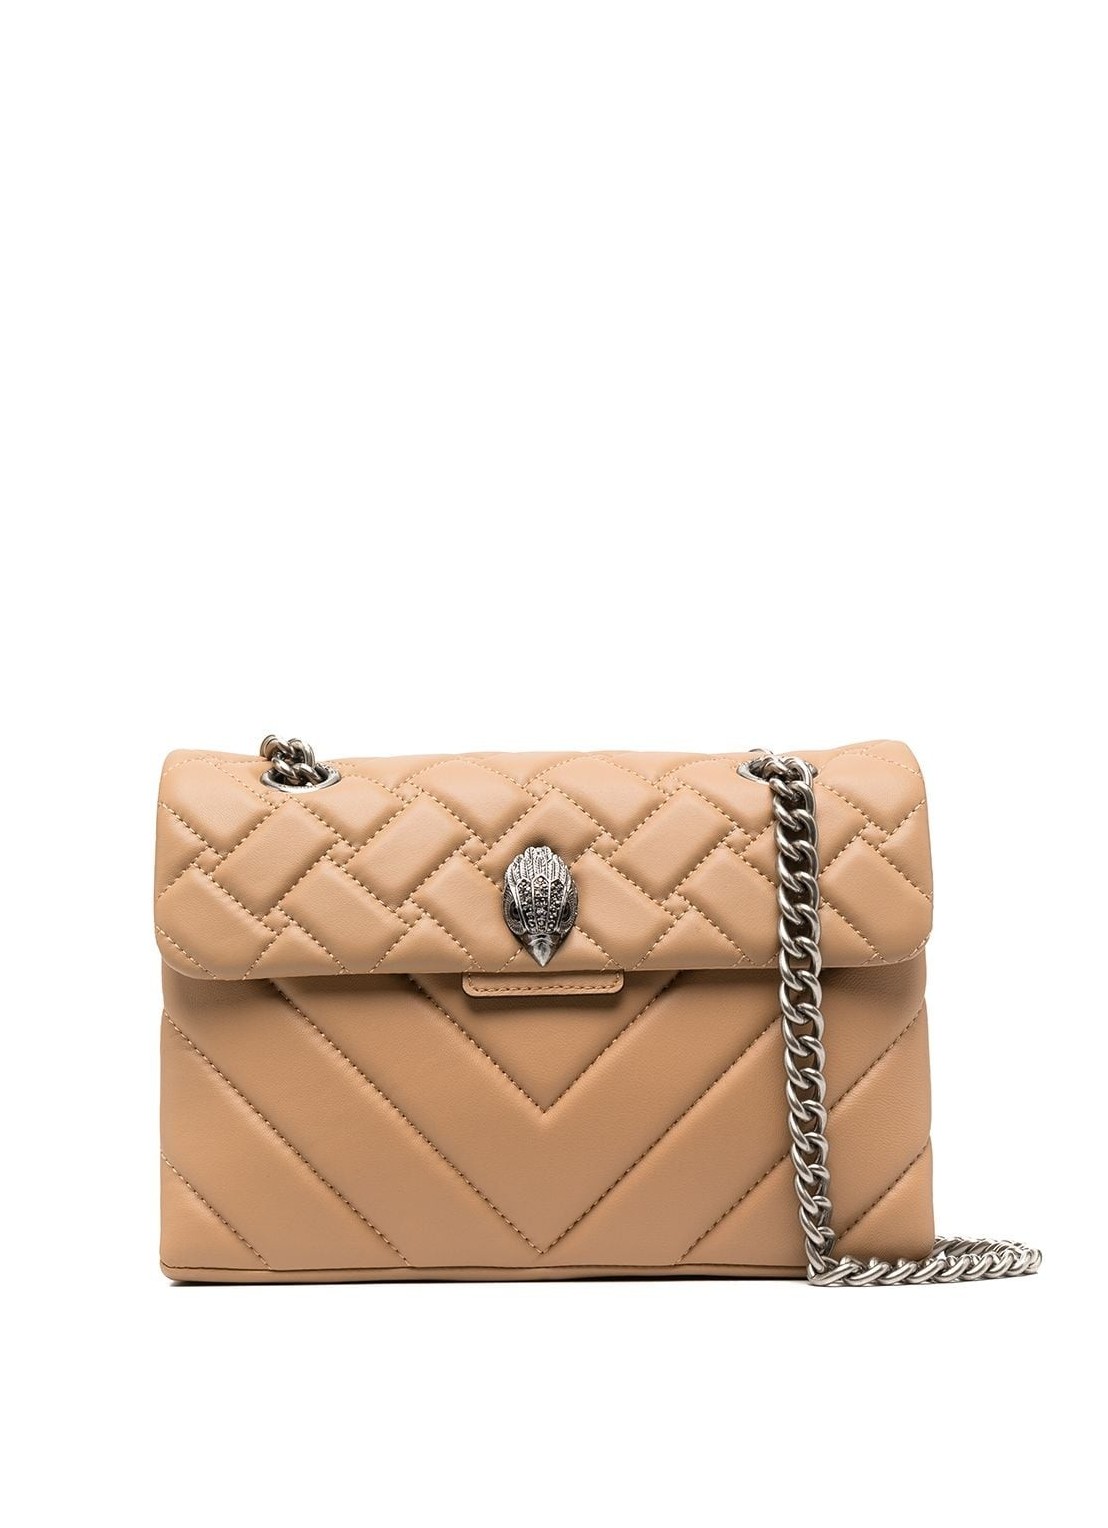 Handbag kurt geiger handbag woman leather kensington x bag 1470448109 48 talla T/U
 